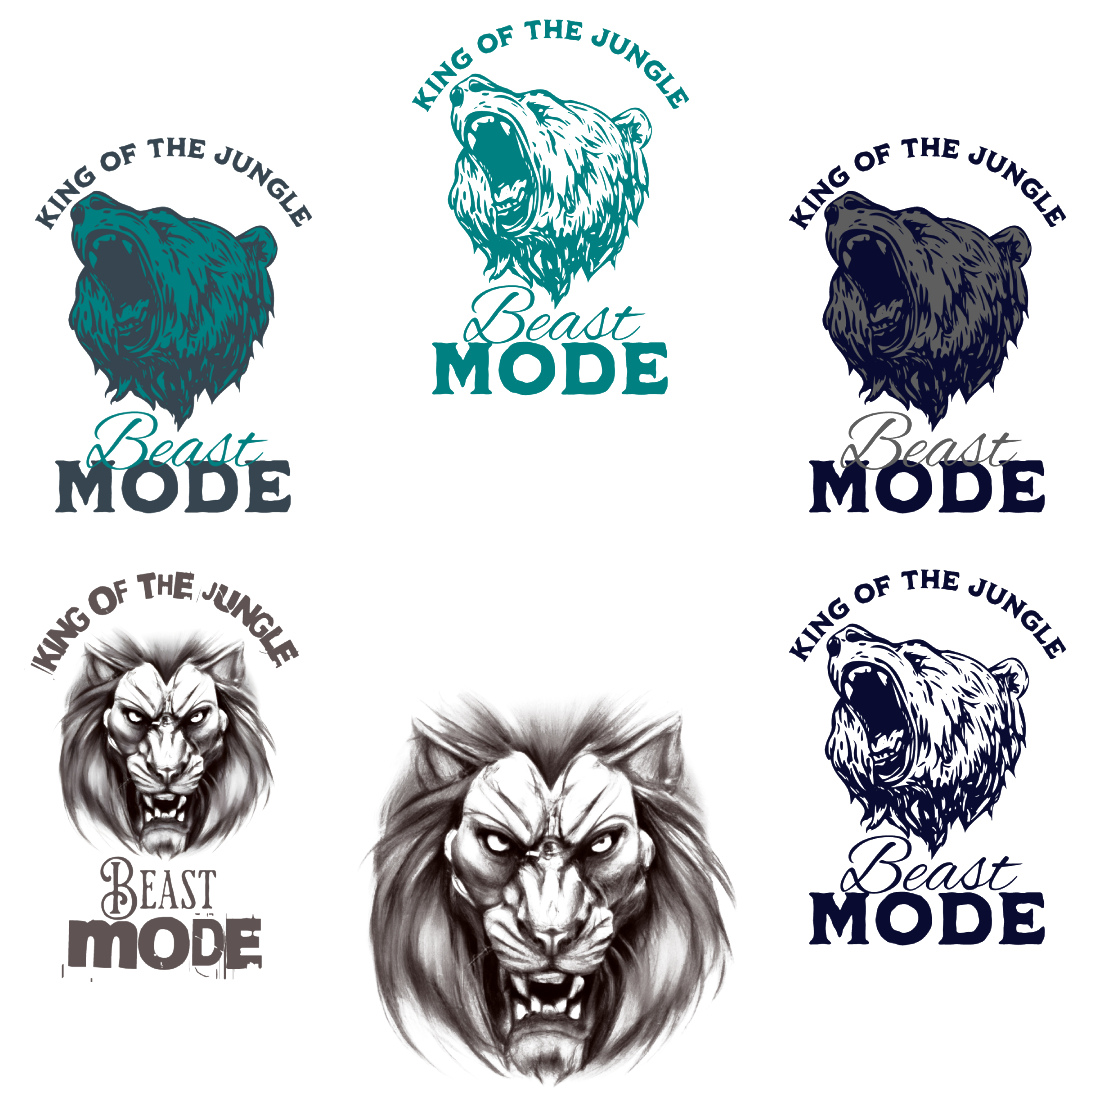 6 vintage tshirt design bundle "King of the Jungle, Beast Mode" cover image.